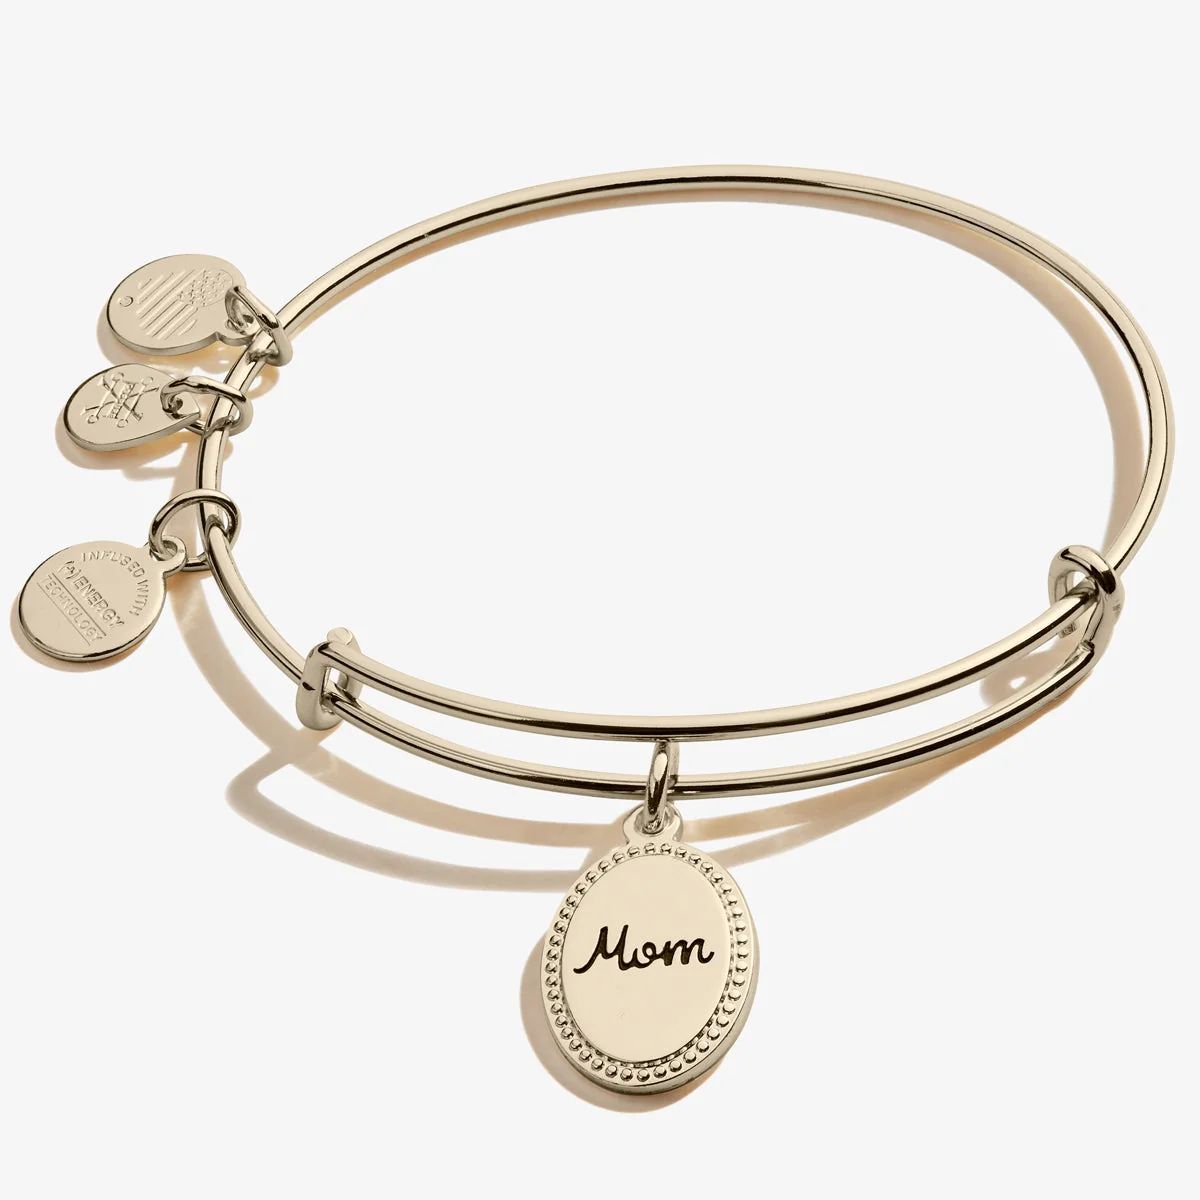 Mom Charm Bangle Bracelet, 'Bonded by Love' - Alex and Ani | Alex and Ani